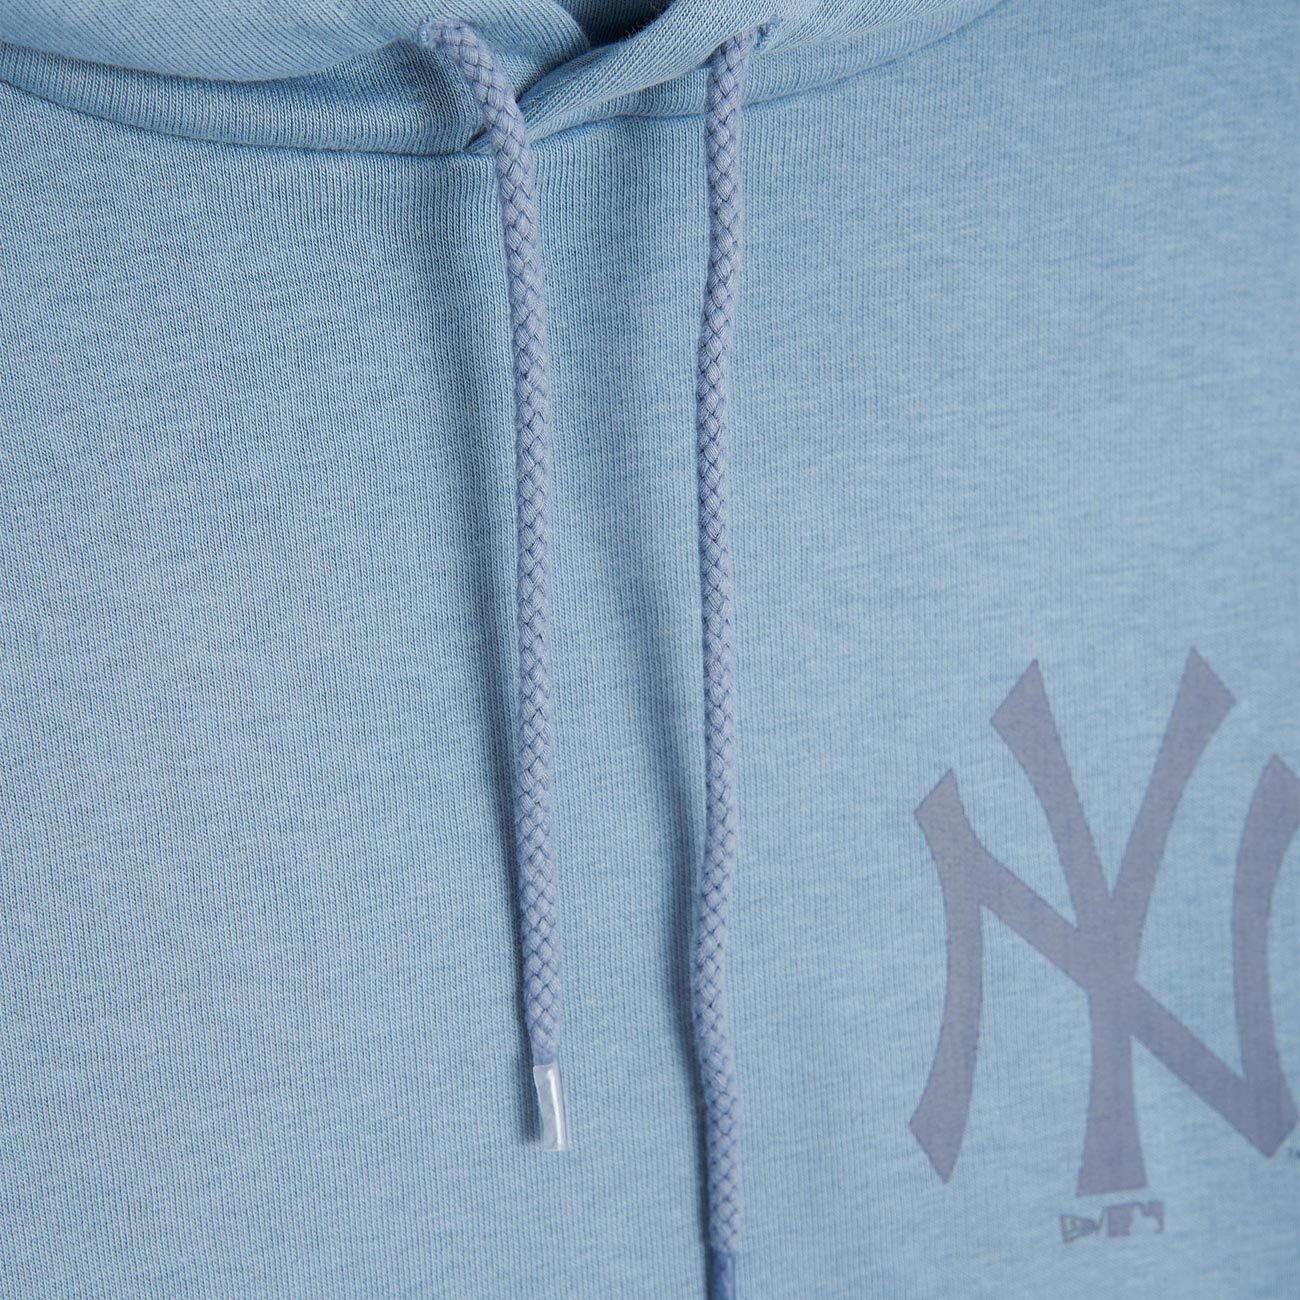 New York Yankees Hoodies, Yankees Sweatshirts, Fleece